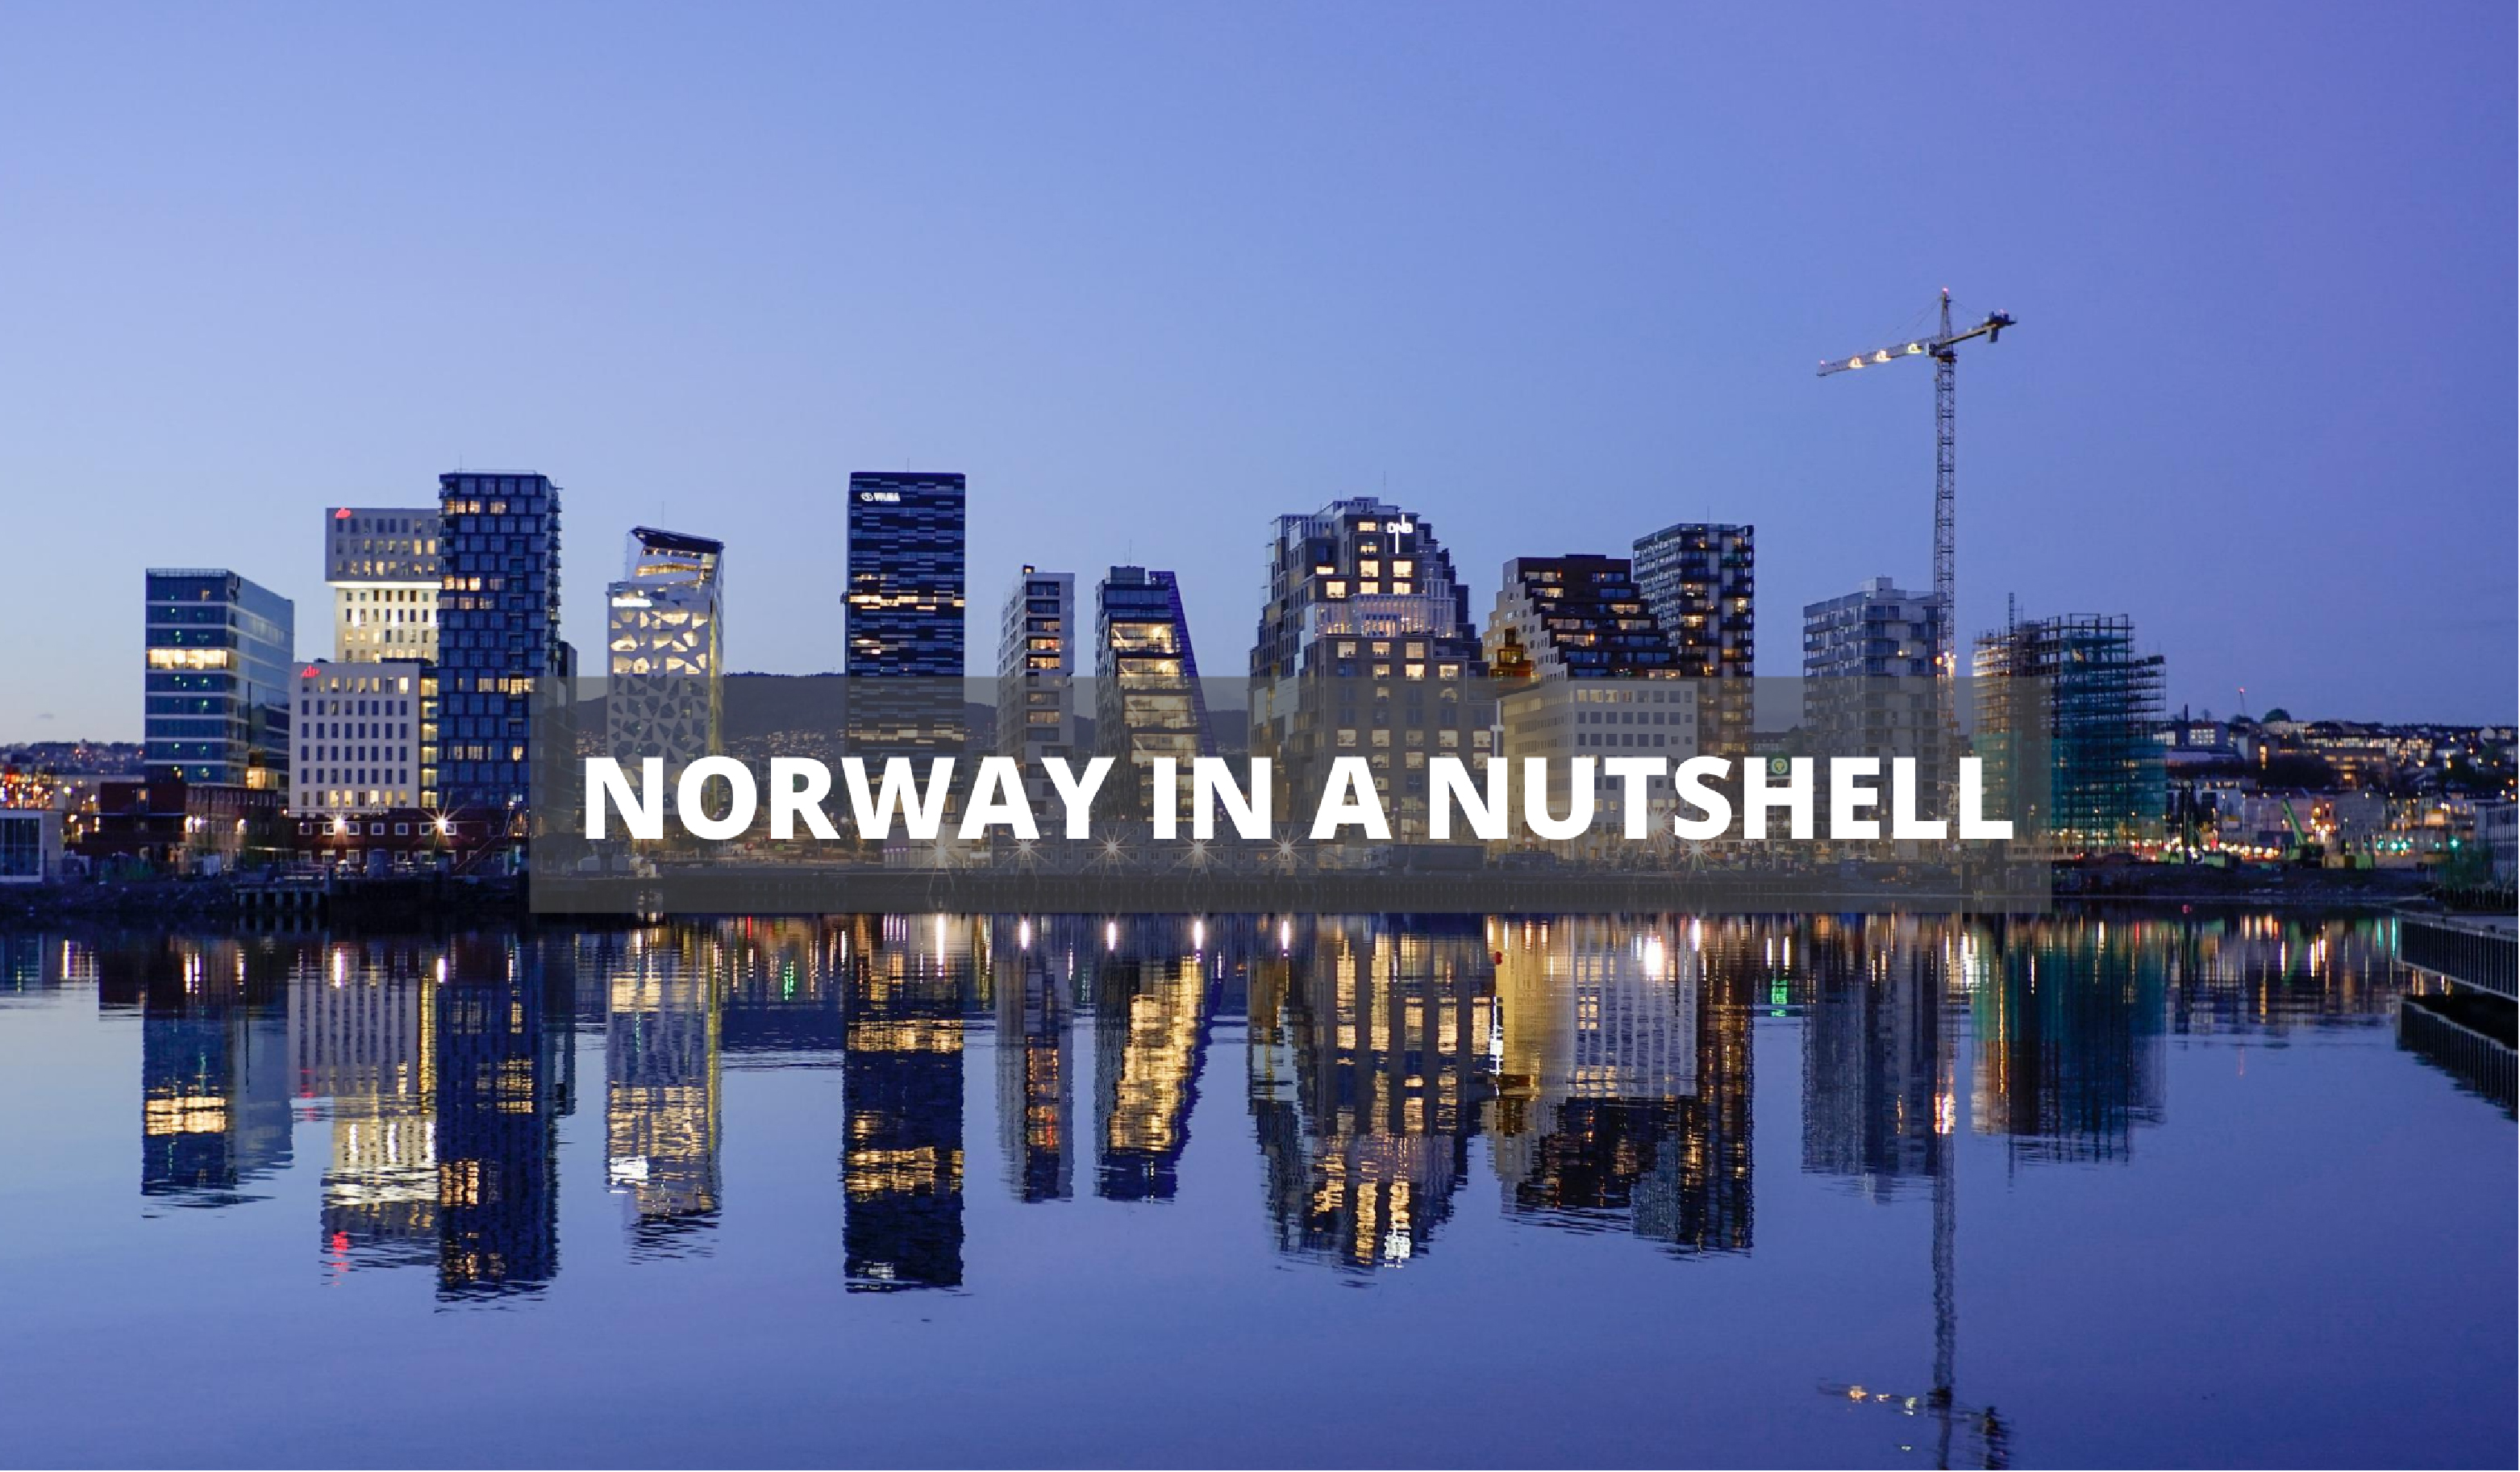 NORWAY IN A NUTSHELL